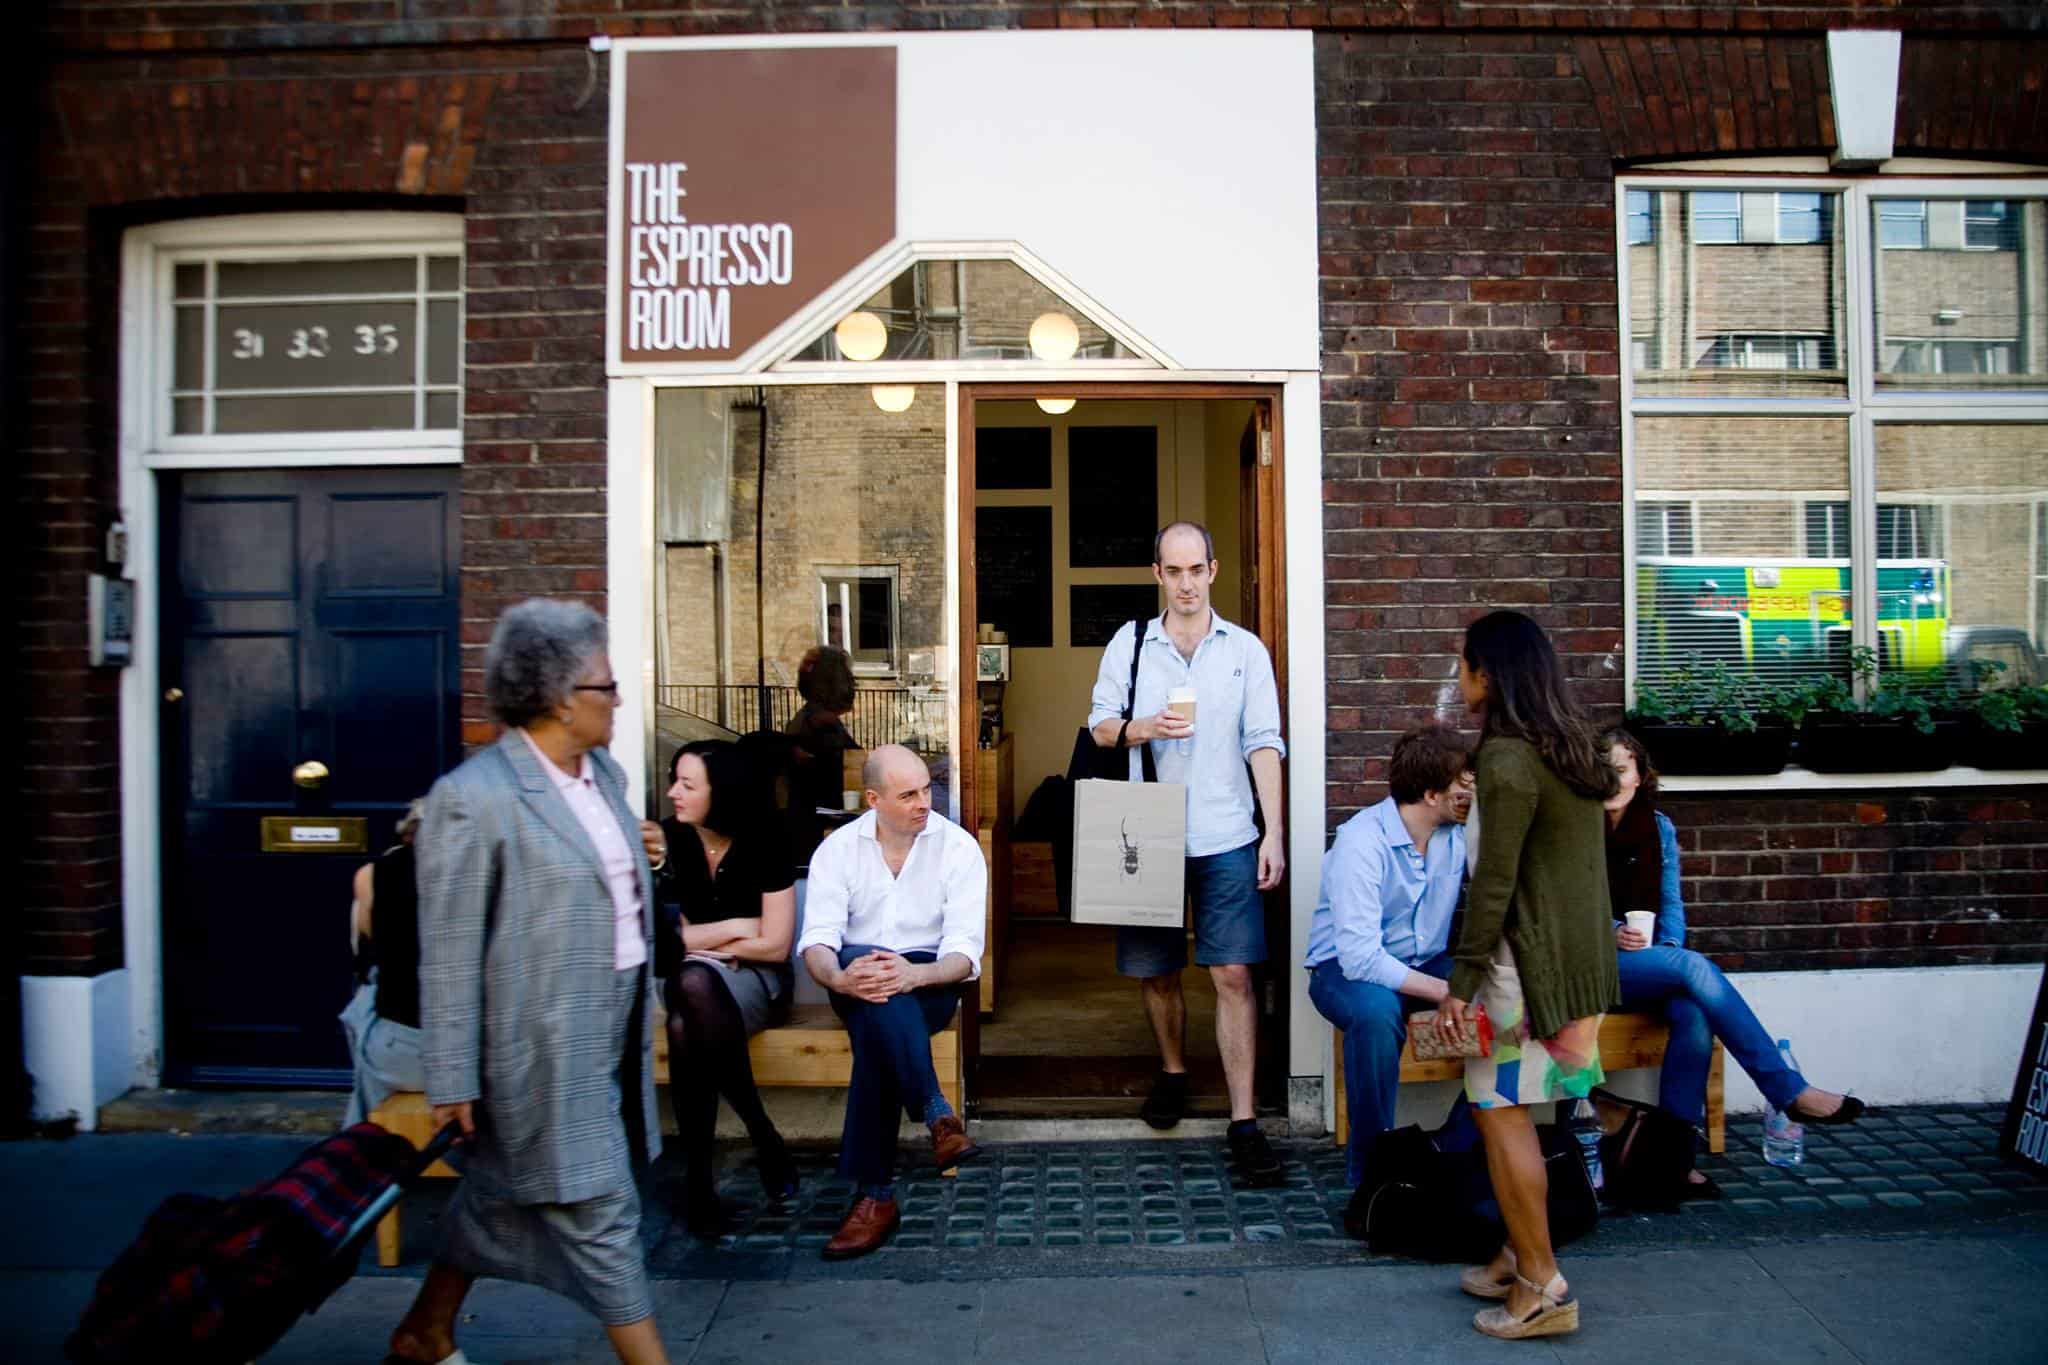 15 Best Cafes in Covent Garden For Brunch, Breakfast & Artisan Coffee